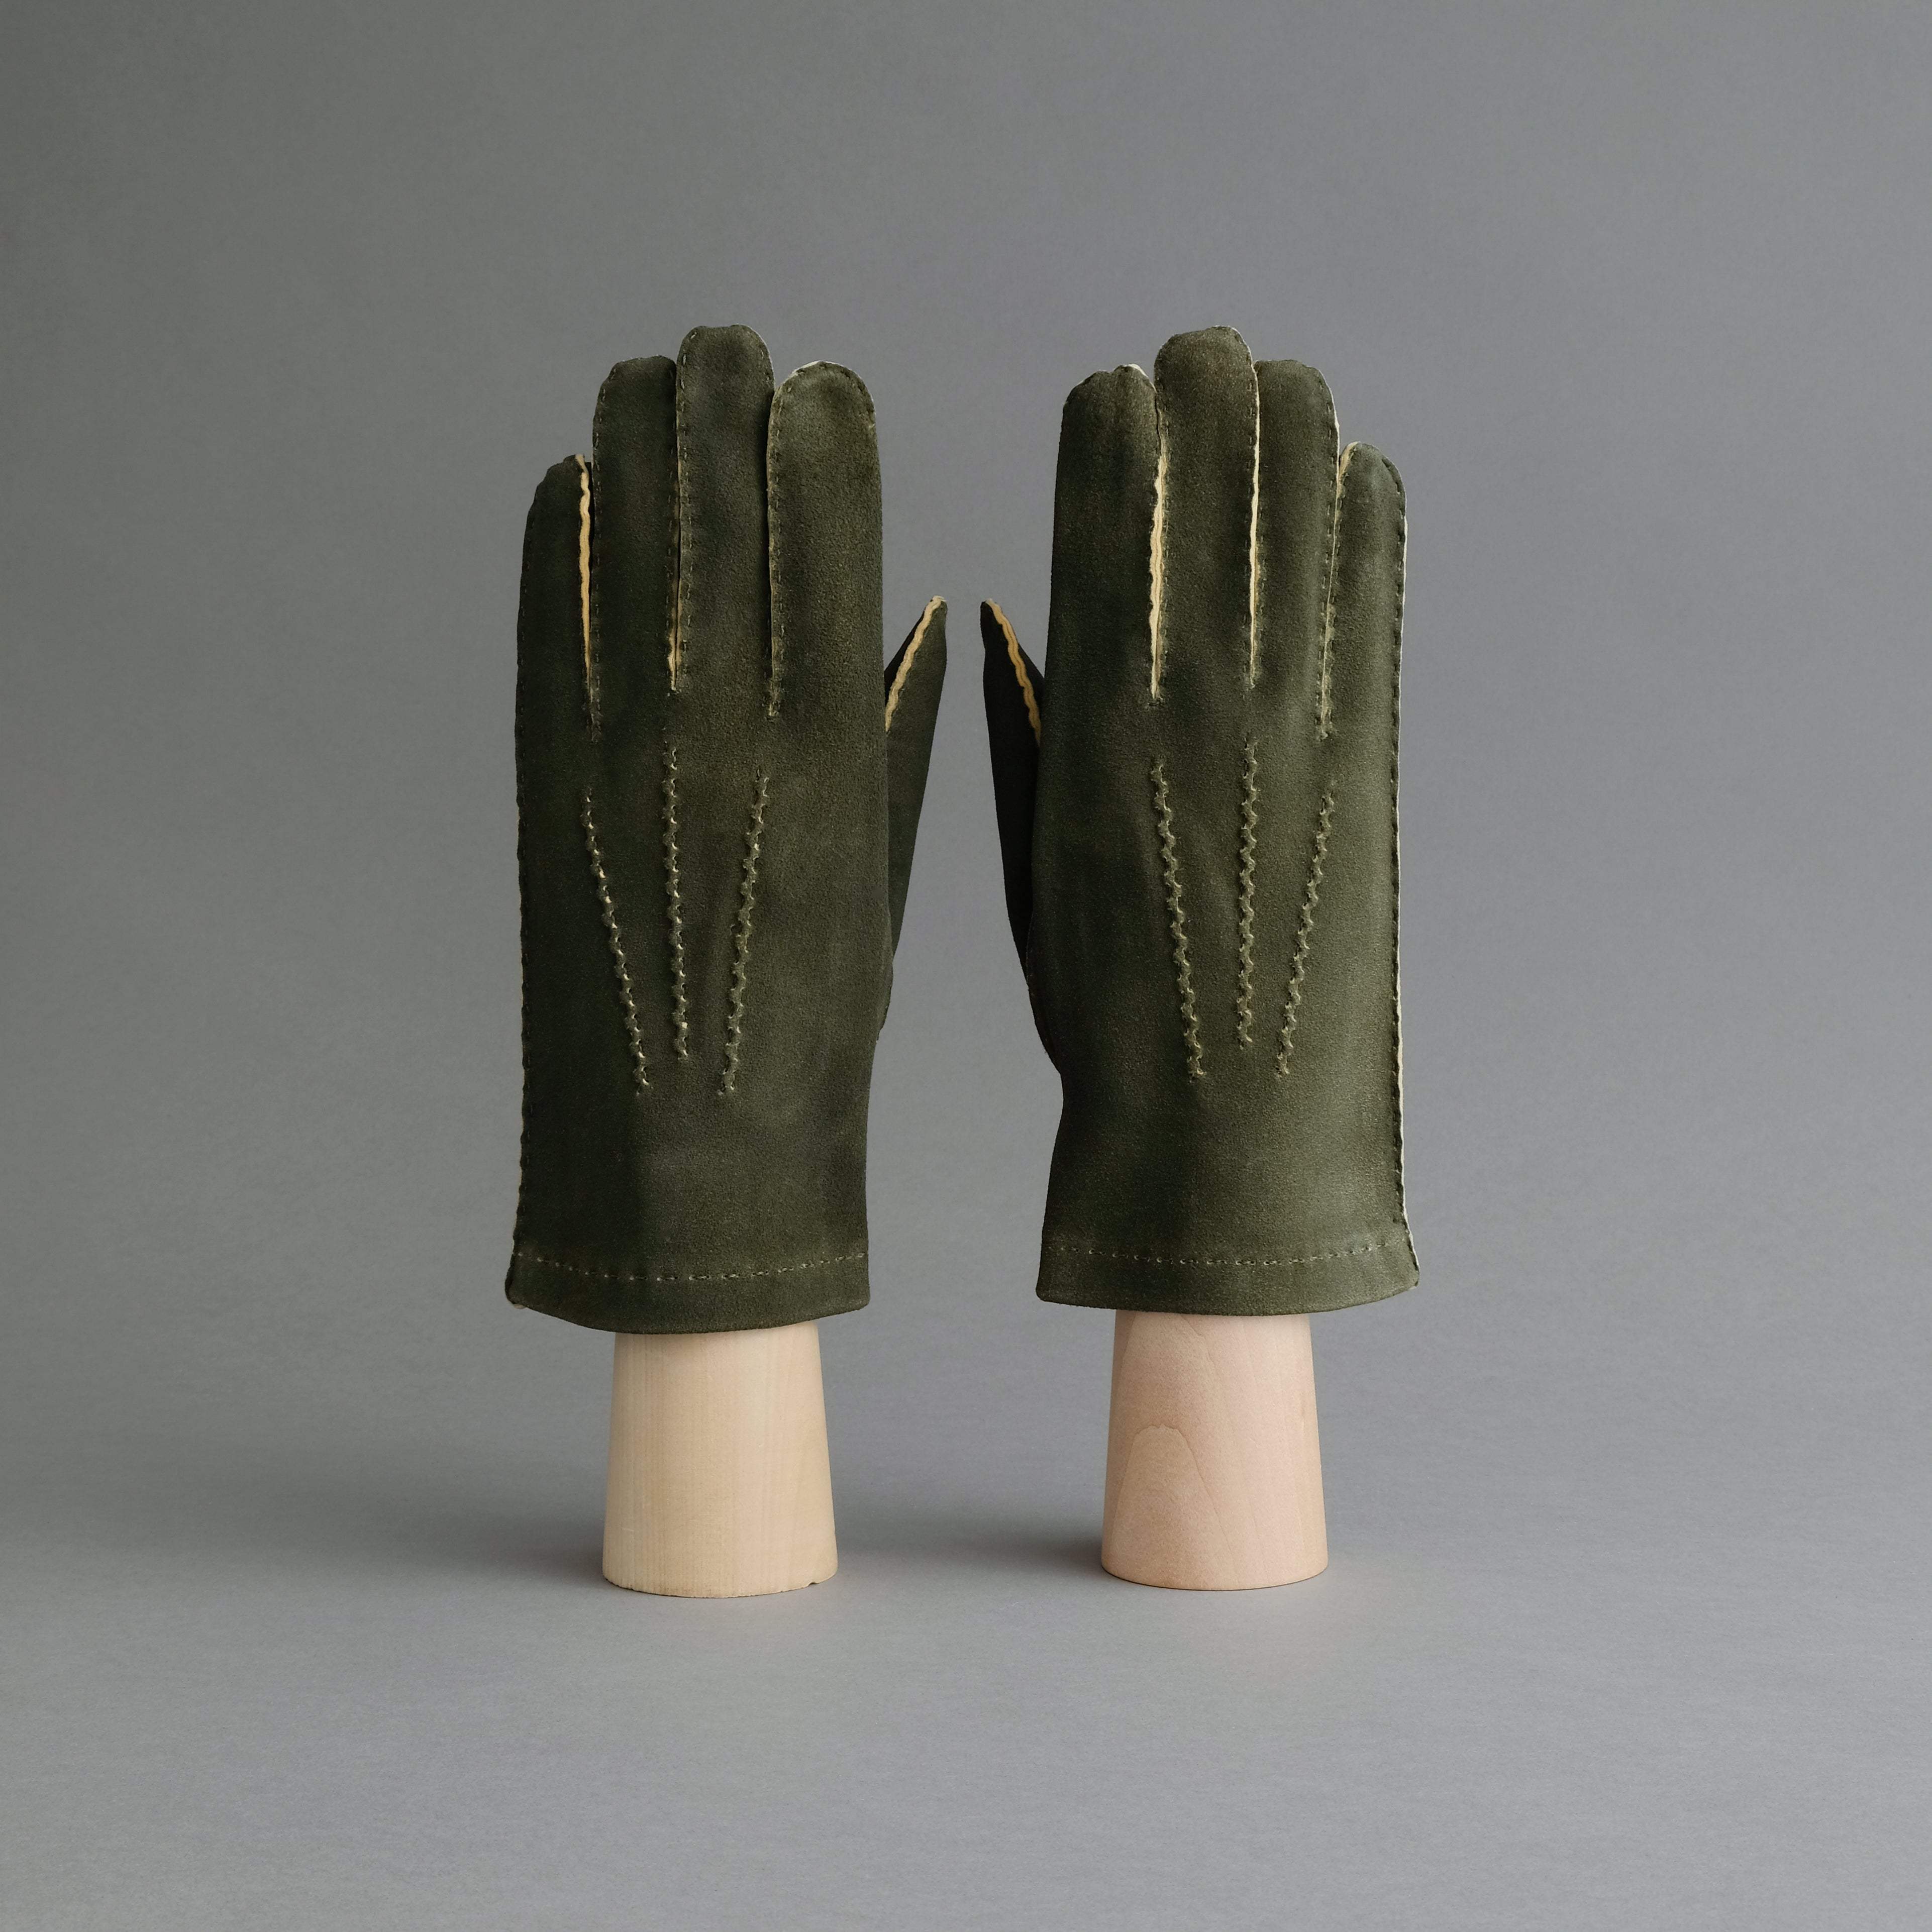 Gentlemen's Hand Sewn Unlined Gloves from Green Doeskin - TR Handschuhe Wien - Thomas Riemer Handmade Gloves